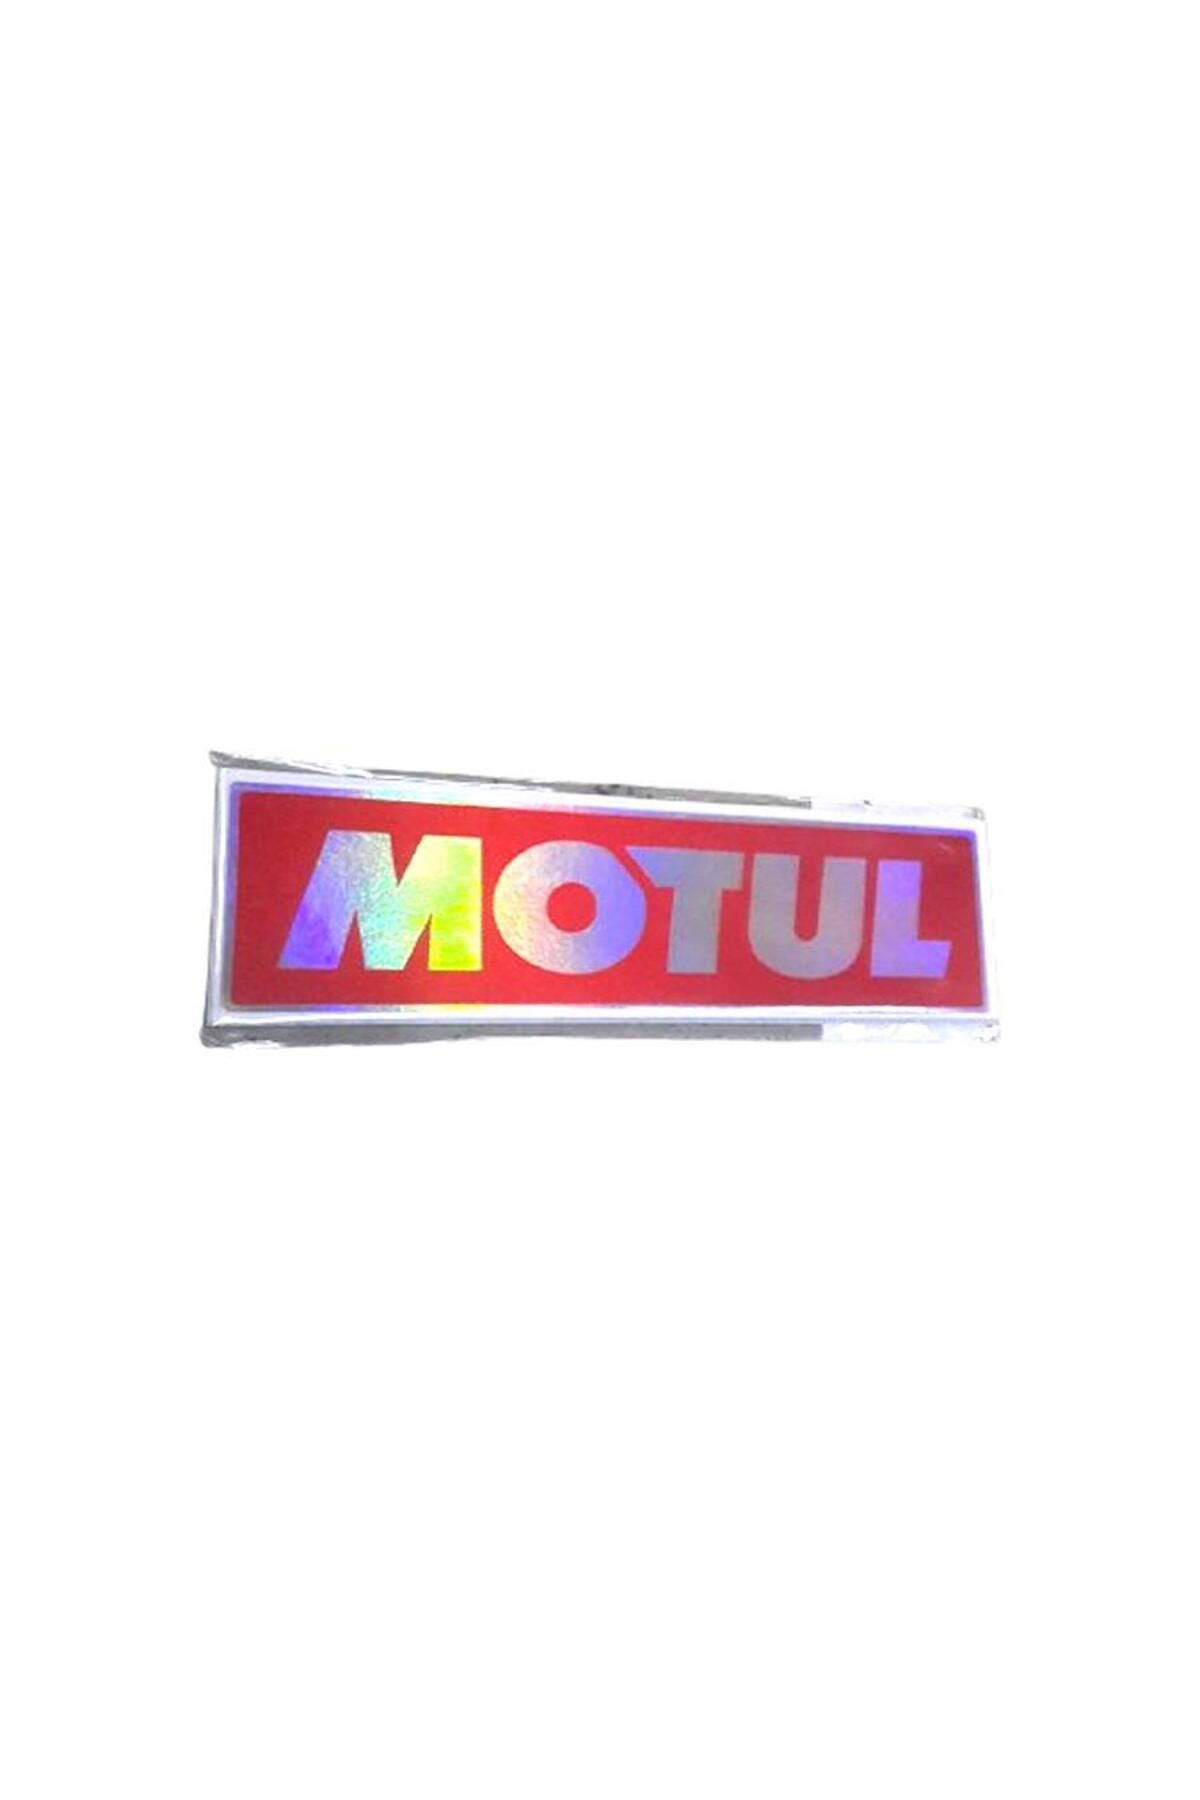 Monero Motul Hologram Sticker 13*4 cm